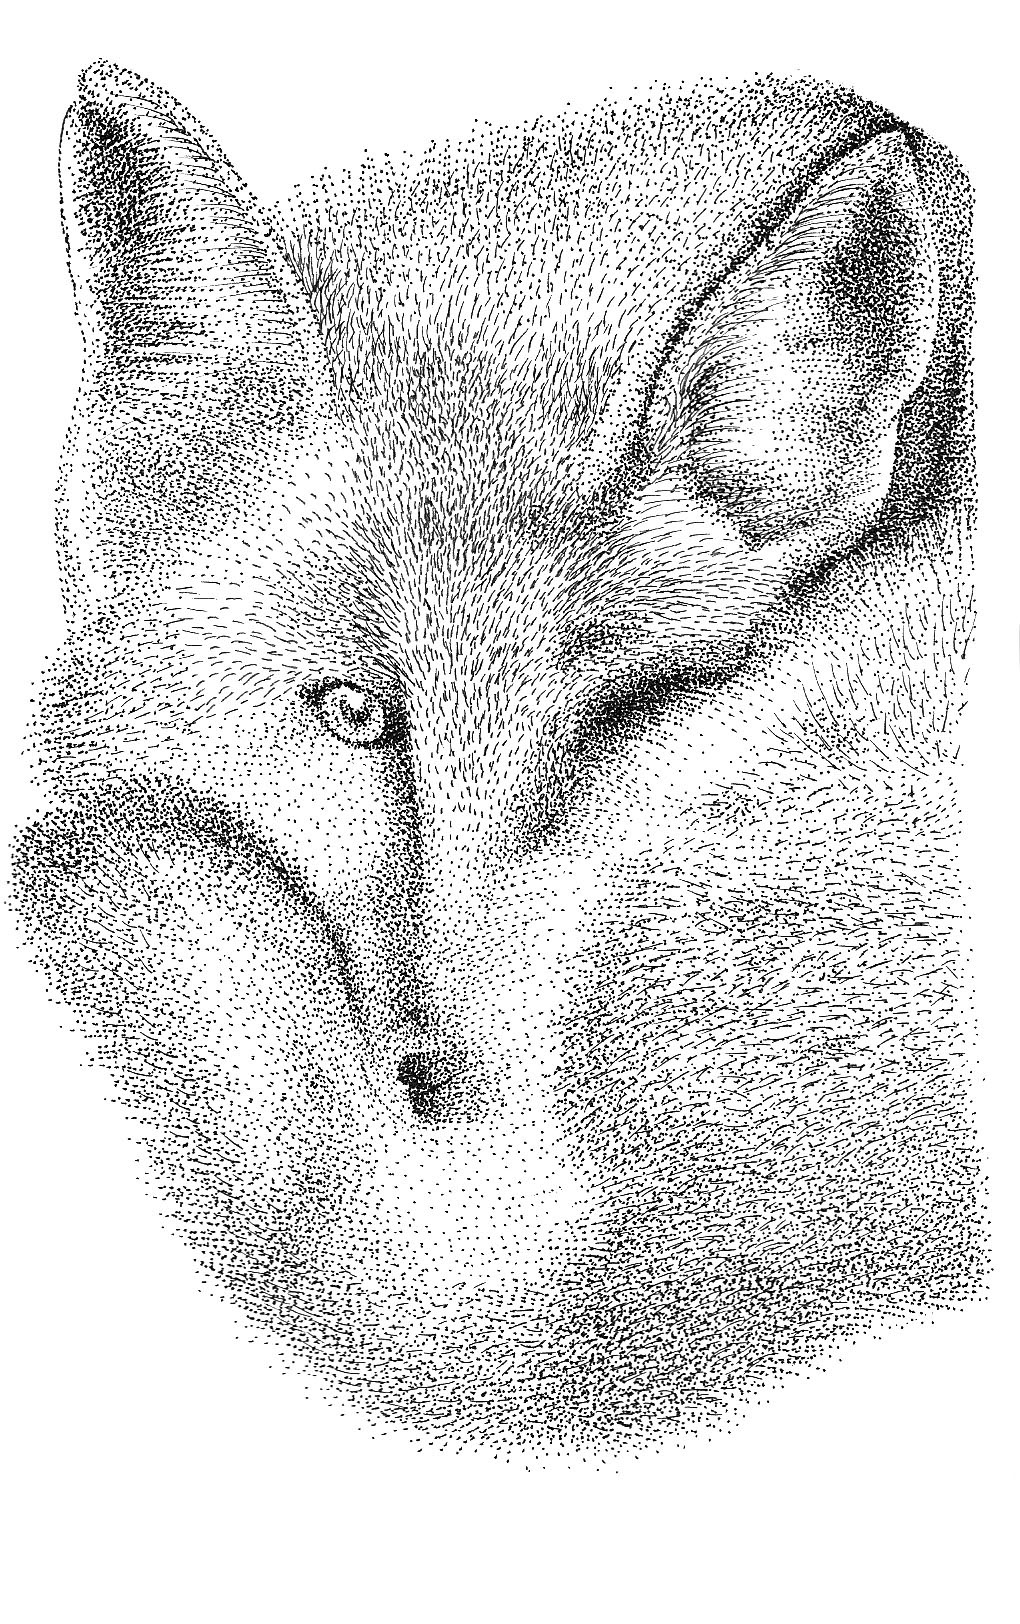 renard sérigraphie impression poils dotwork linework traits points Rotring dessin animal